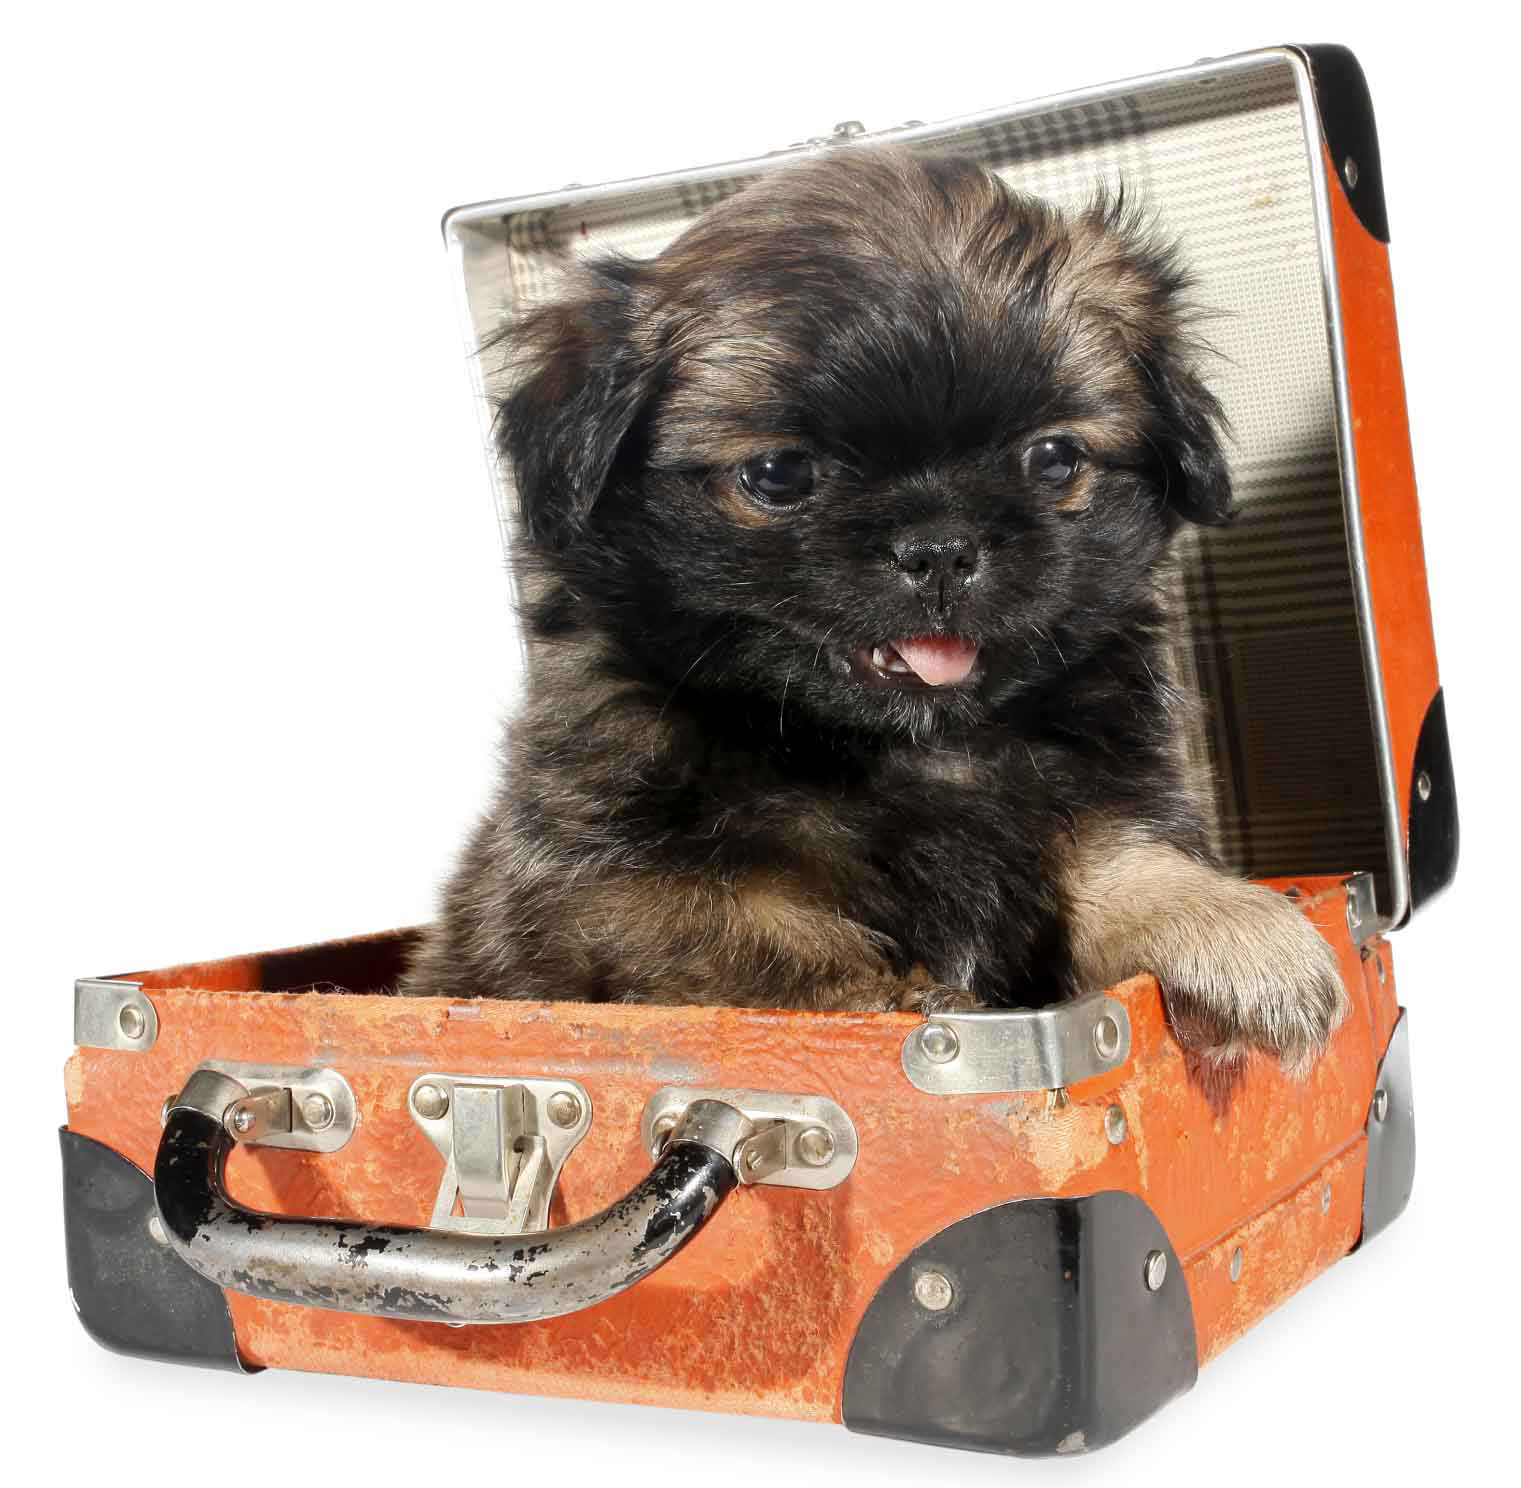 ewok dog in orange suitcase